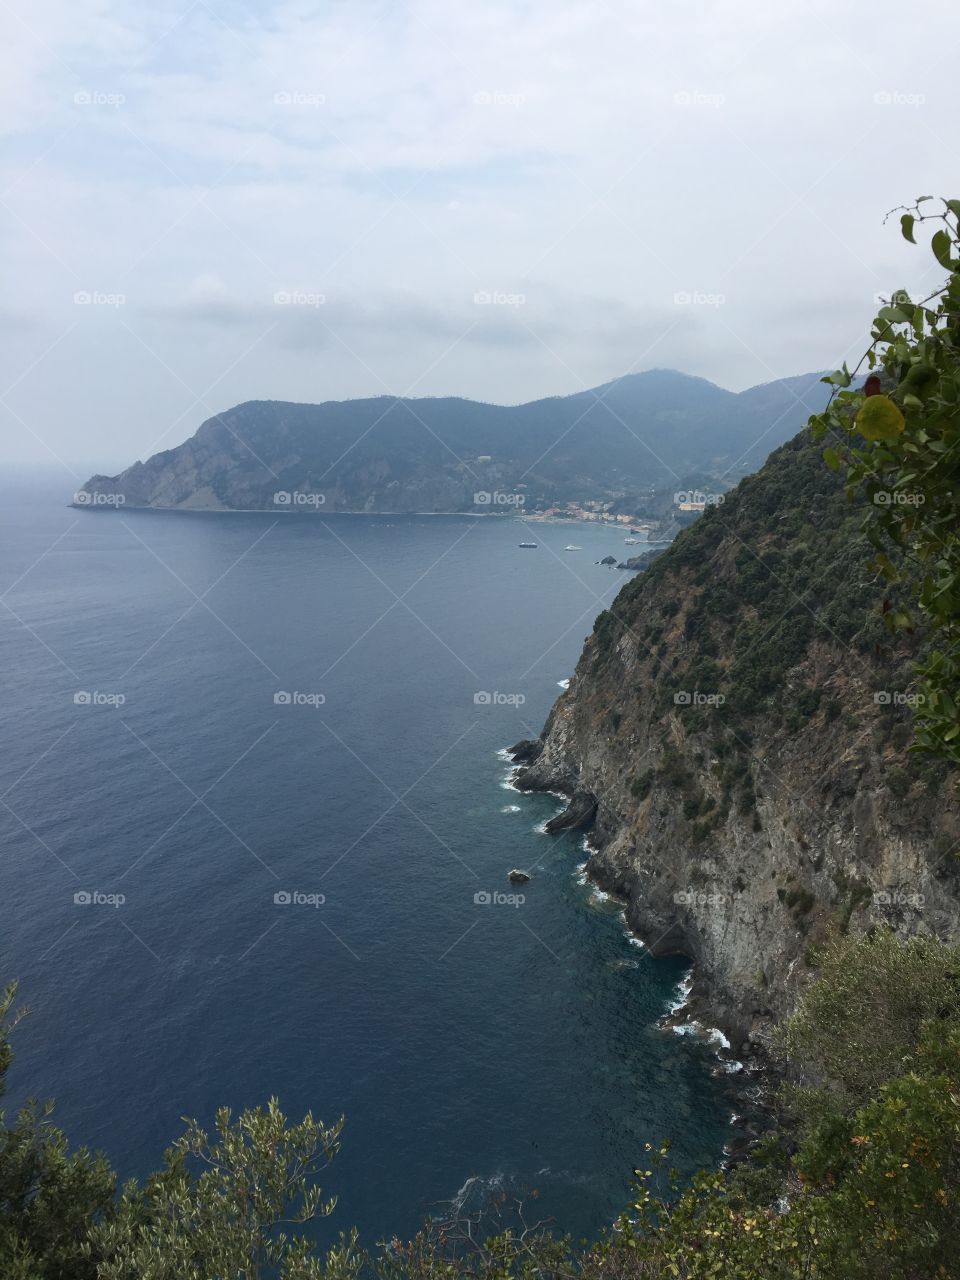 Along the Cinque Terre 